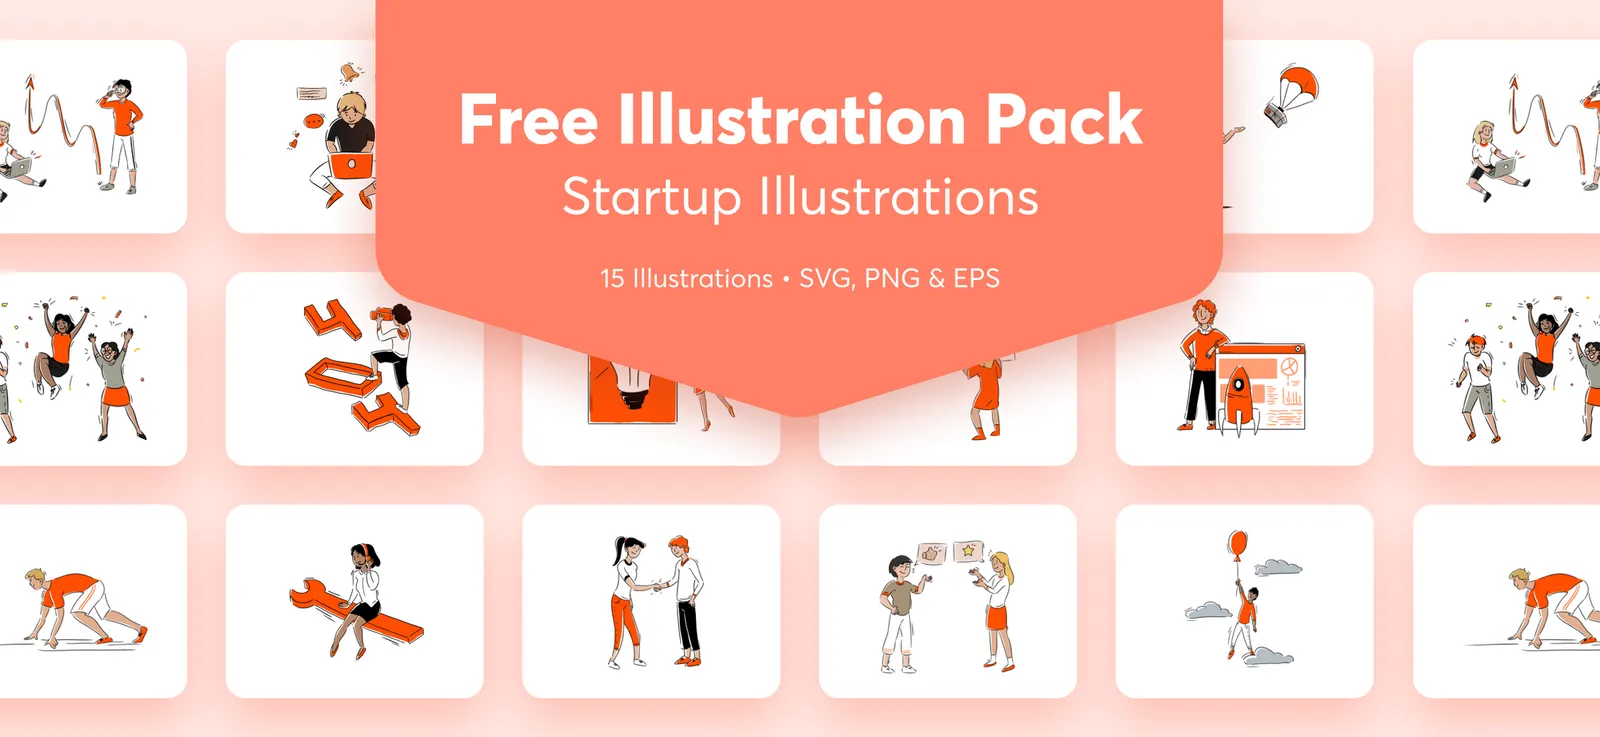 Free Startup Illustrations Pack